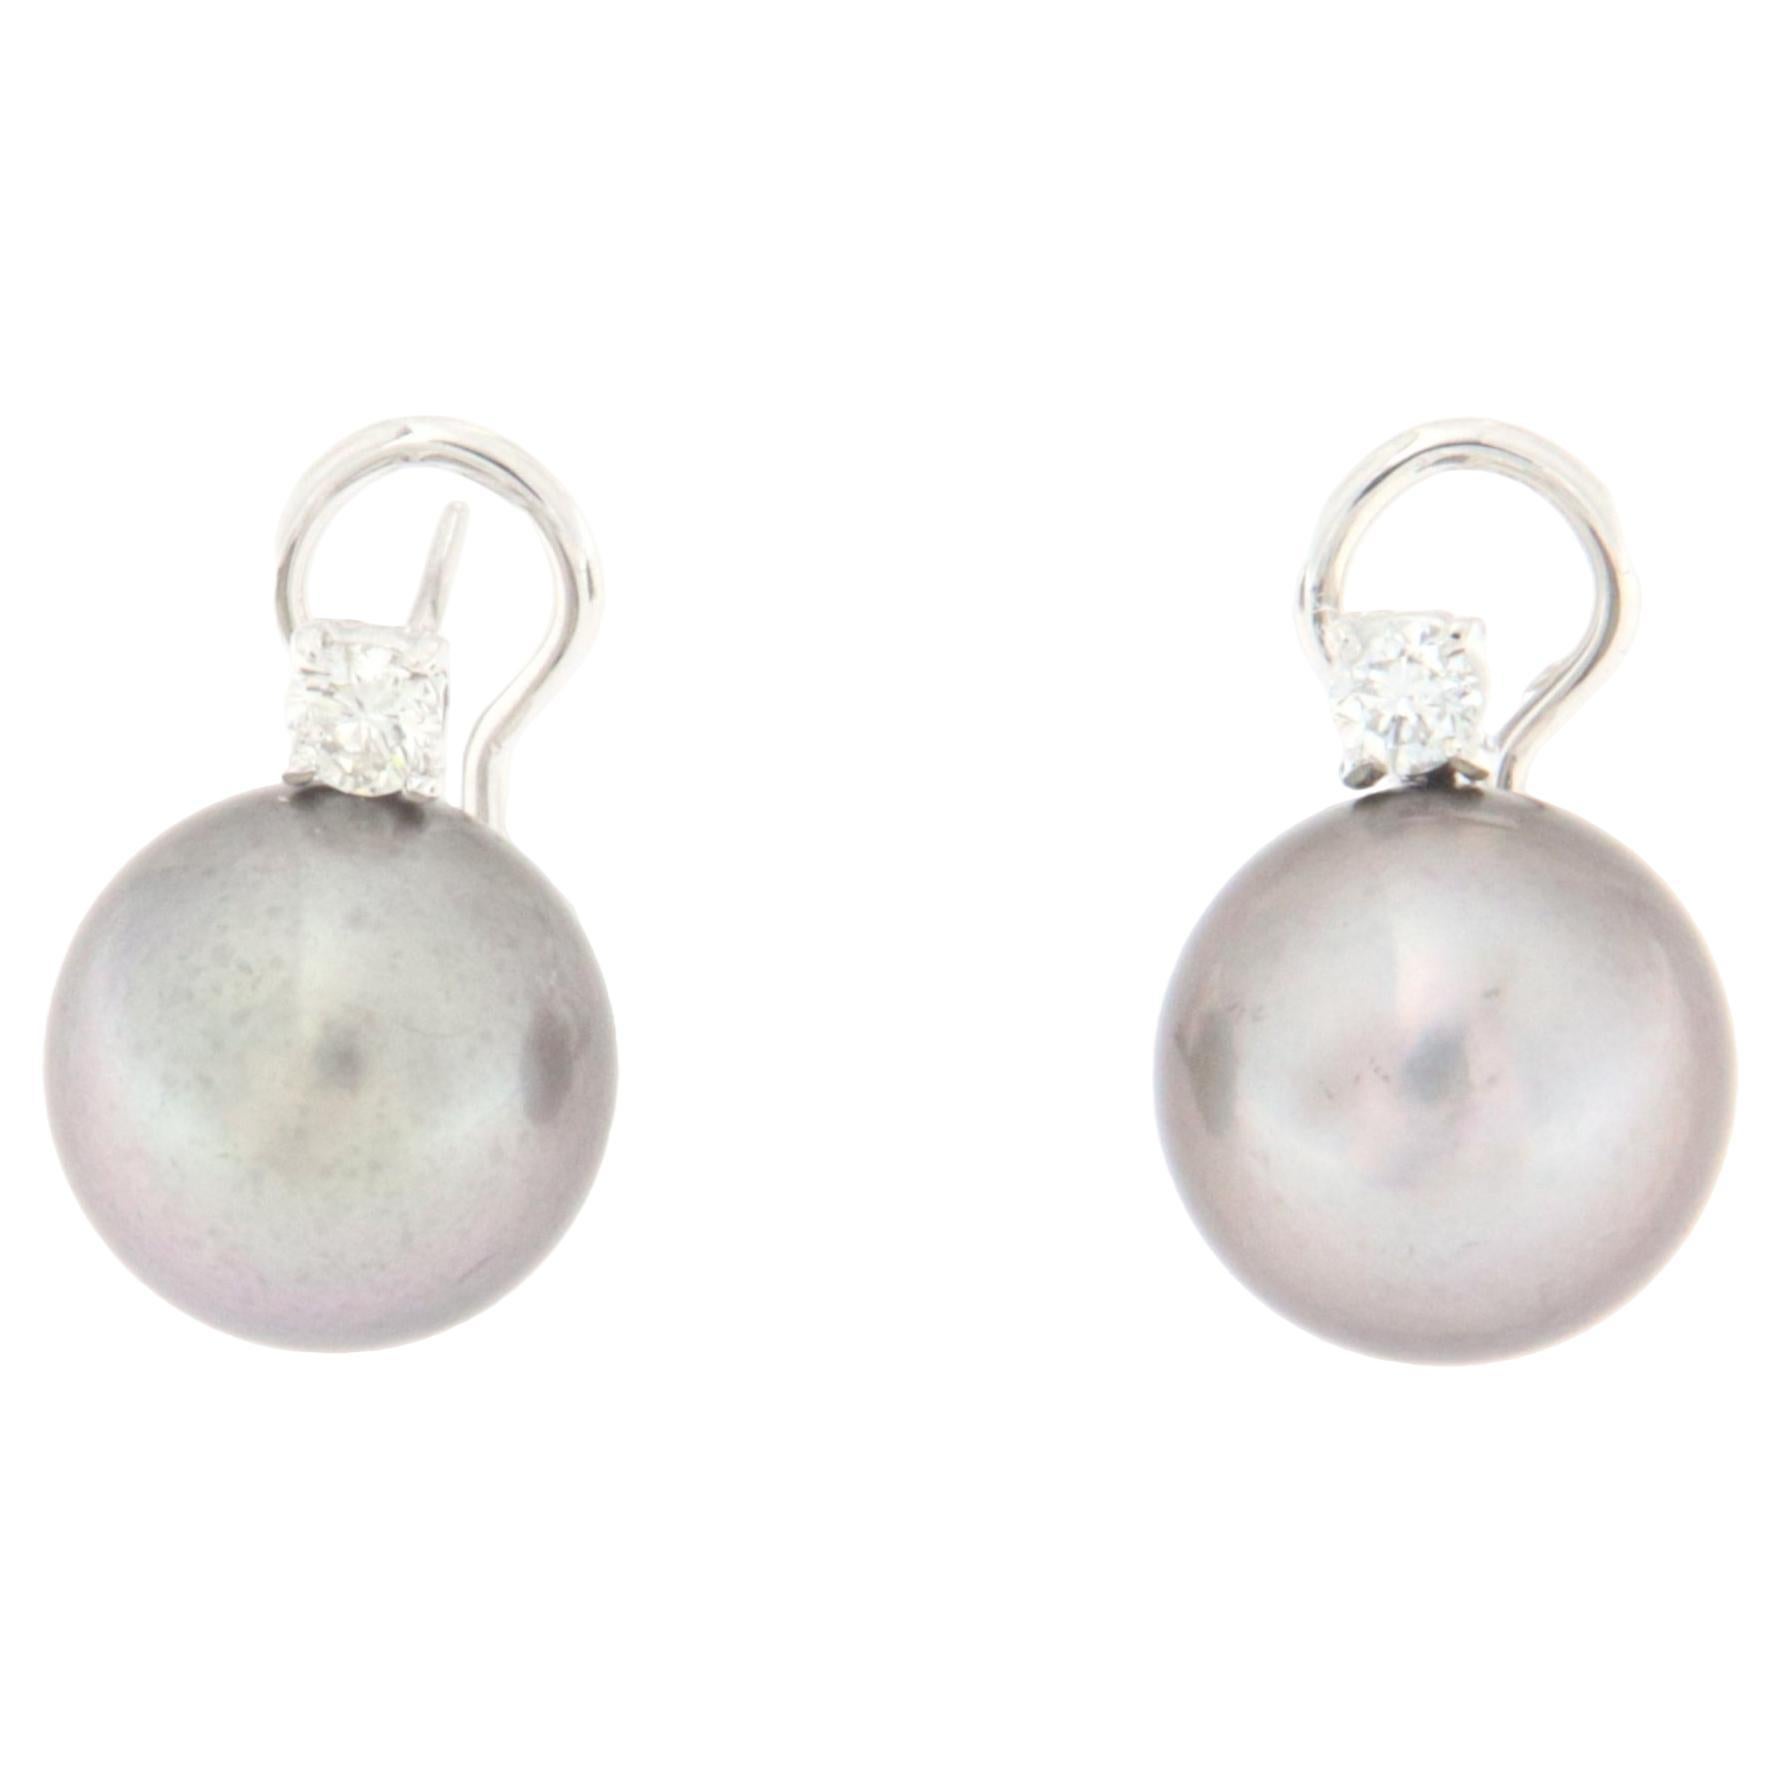 Tahiti Pearls Diamonds 18 Karat White Gold Drop Earrings